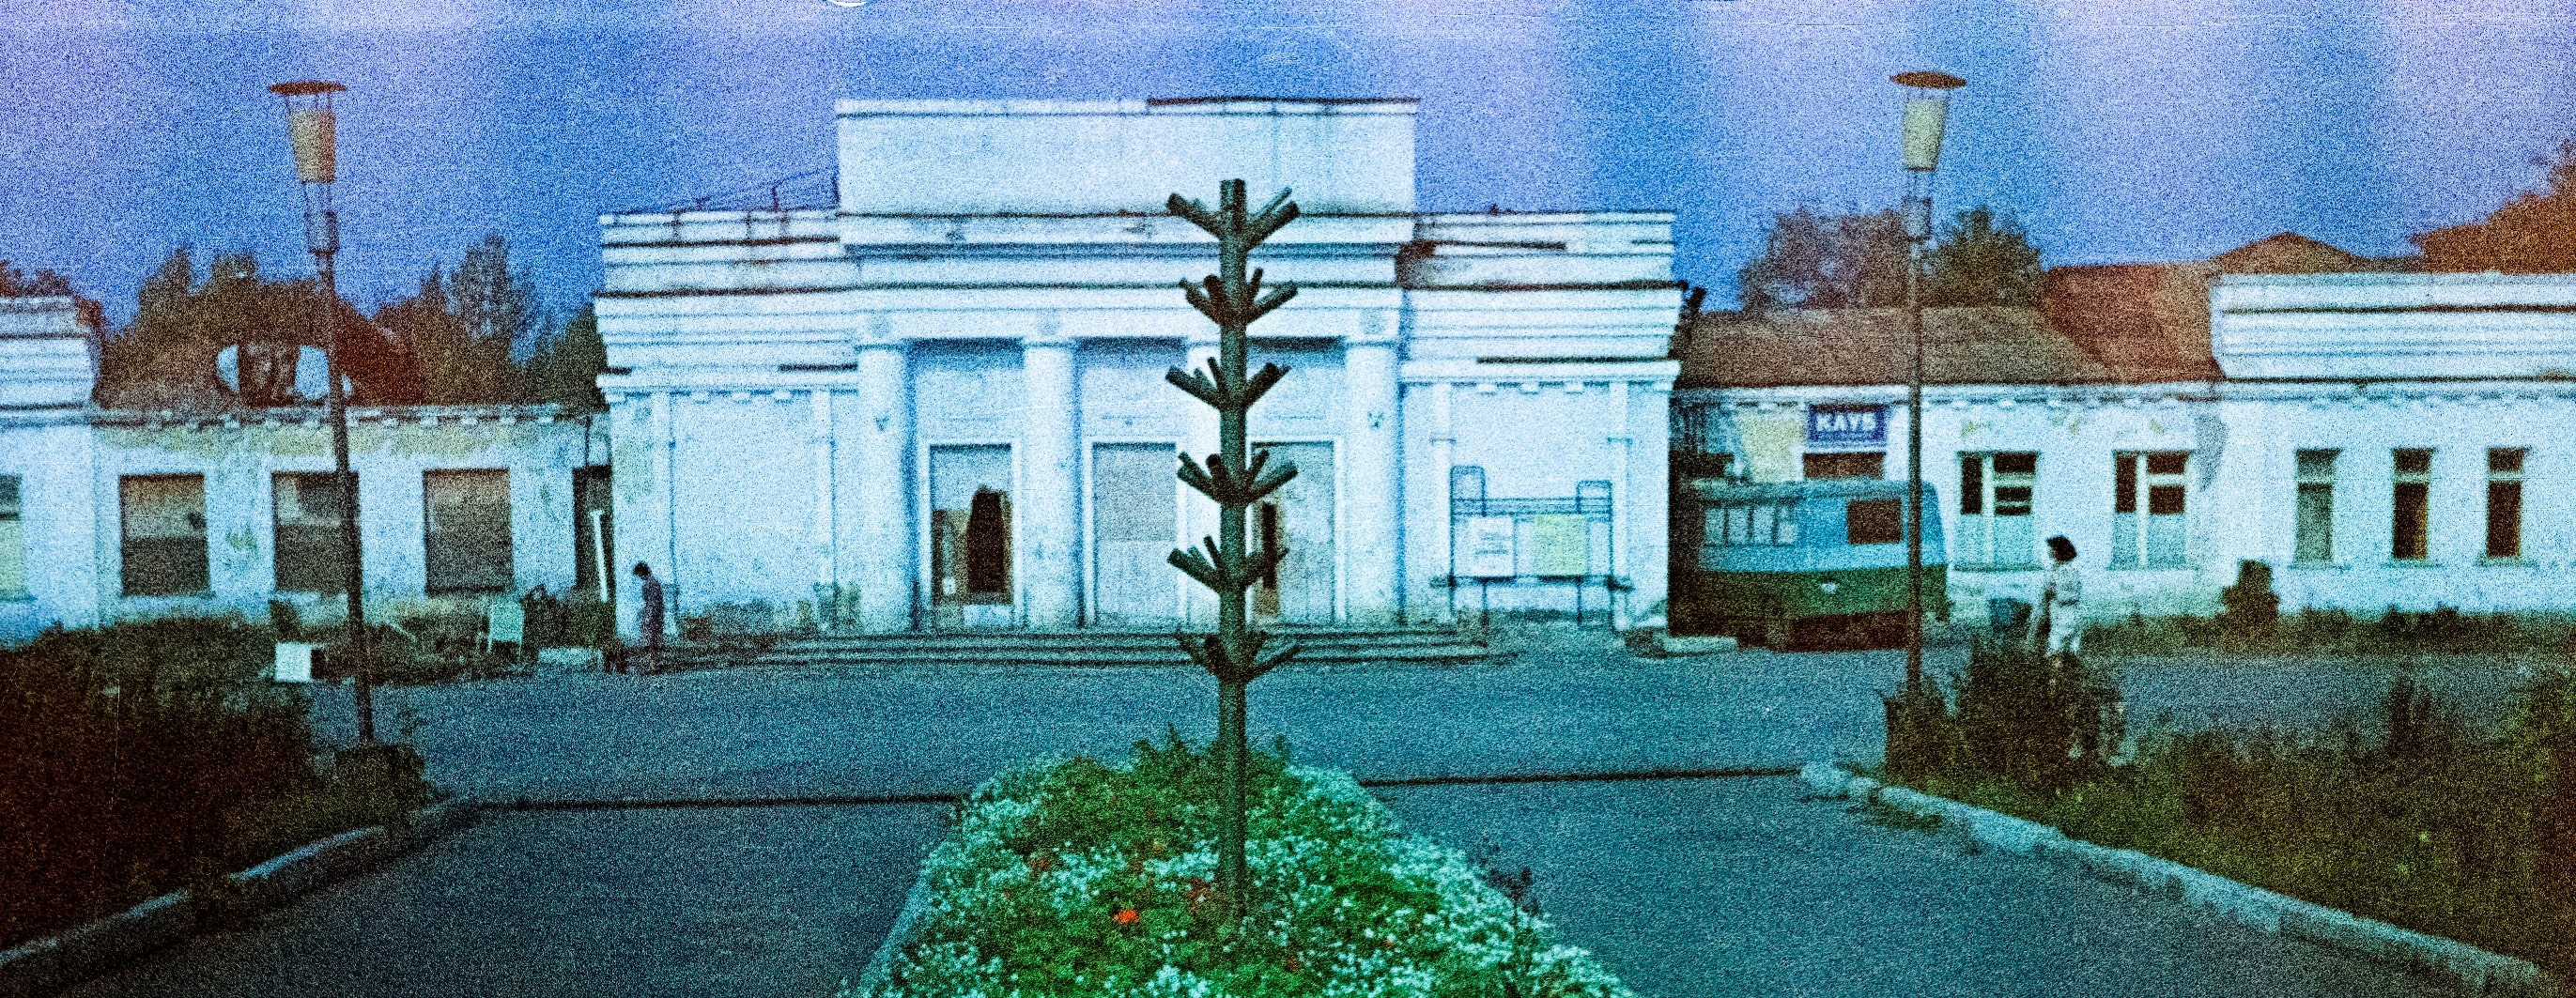 ДК Самарец до реконструкции 1985